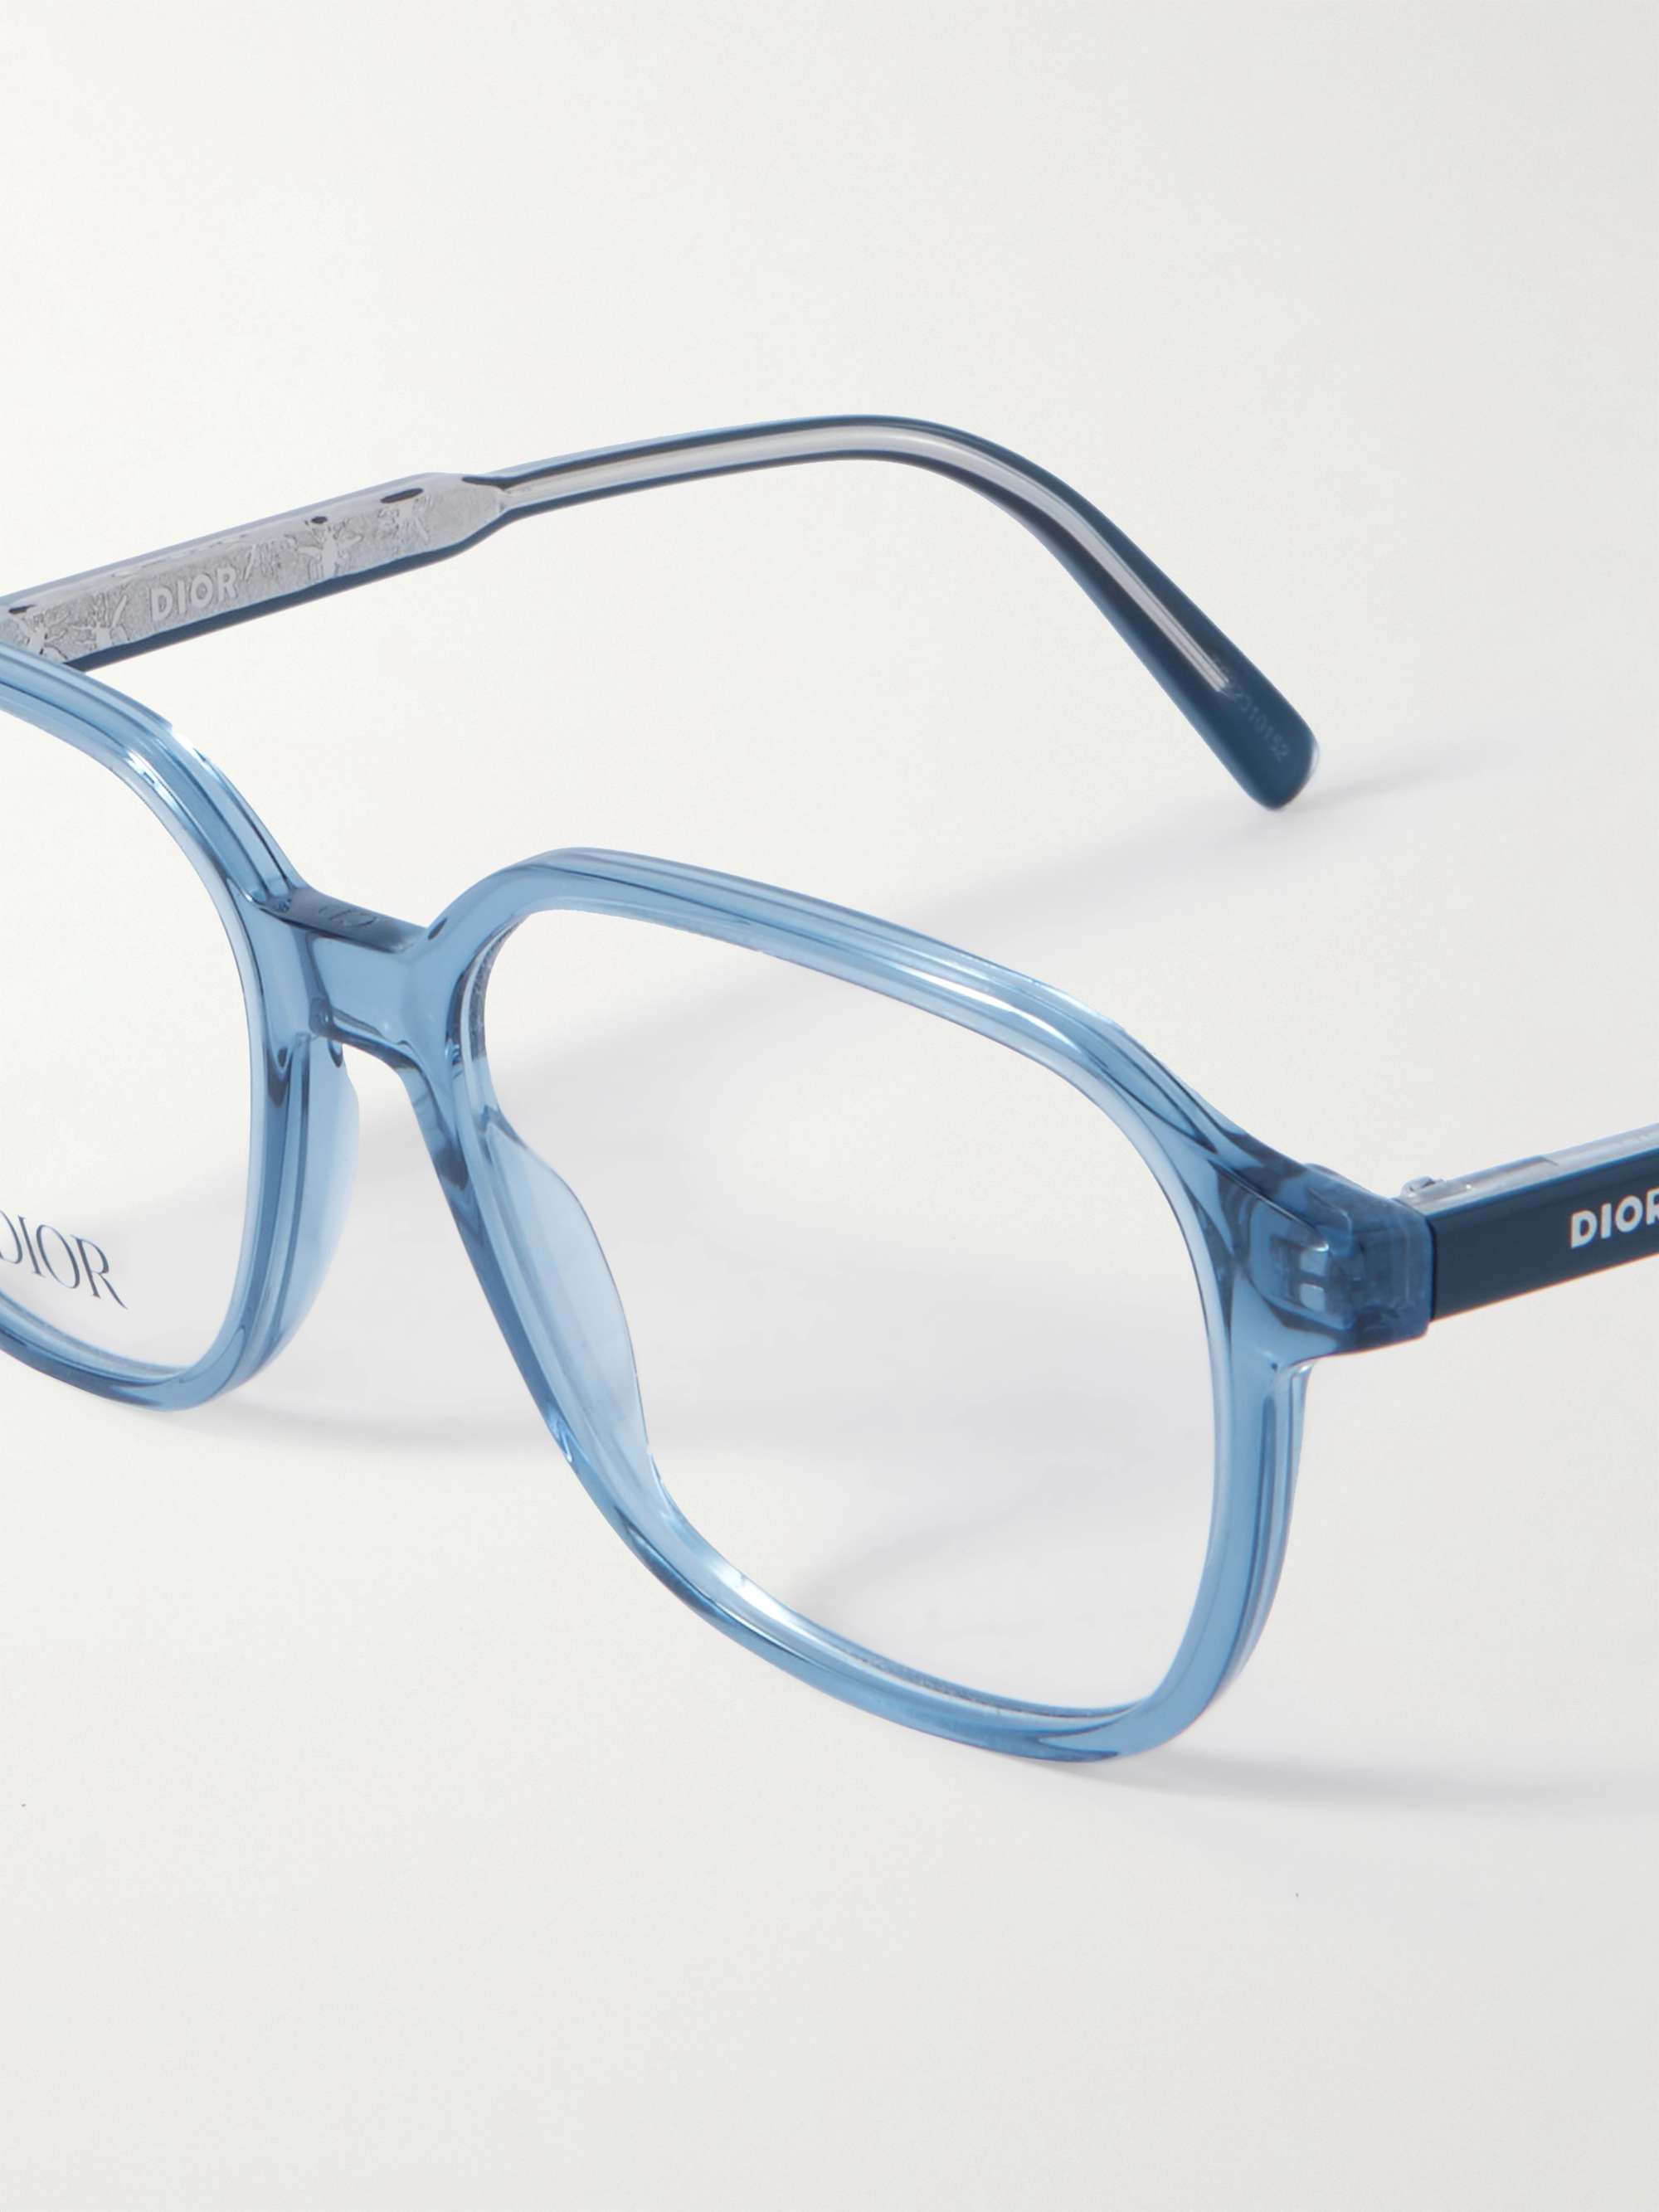 DIOR EYEWEAR InDiorO S3I Square-Frame Tortoiseshell Acetate Optical Glasses